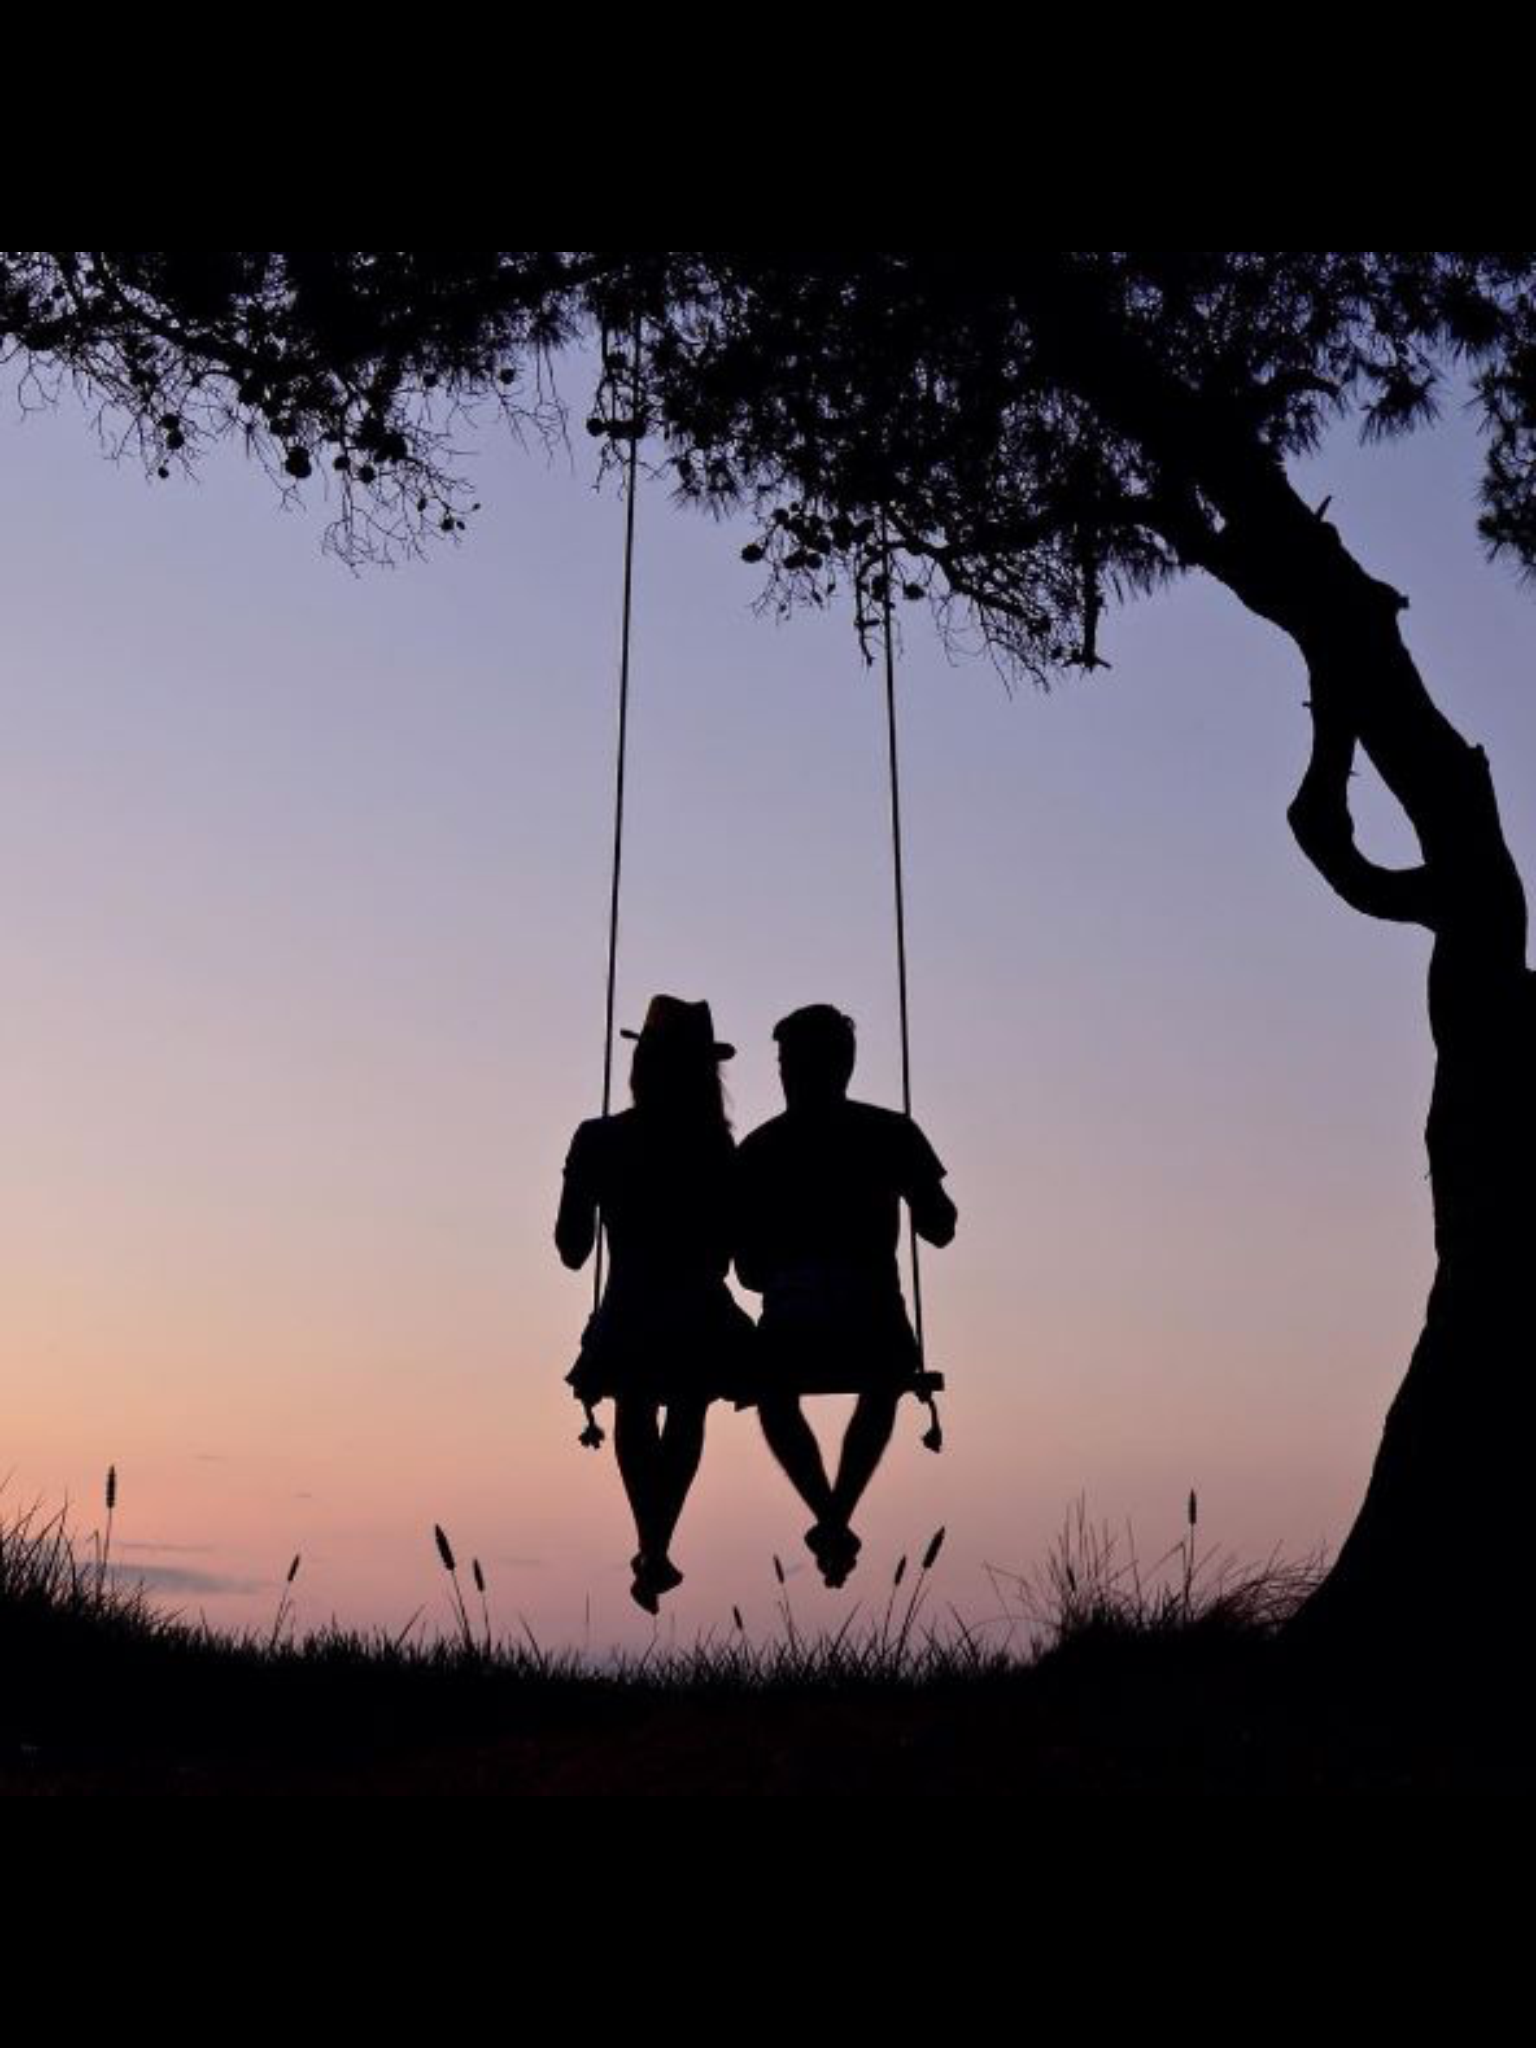 i love u wallpaper with couple,swing,sky,silhouette,tree,recreation